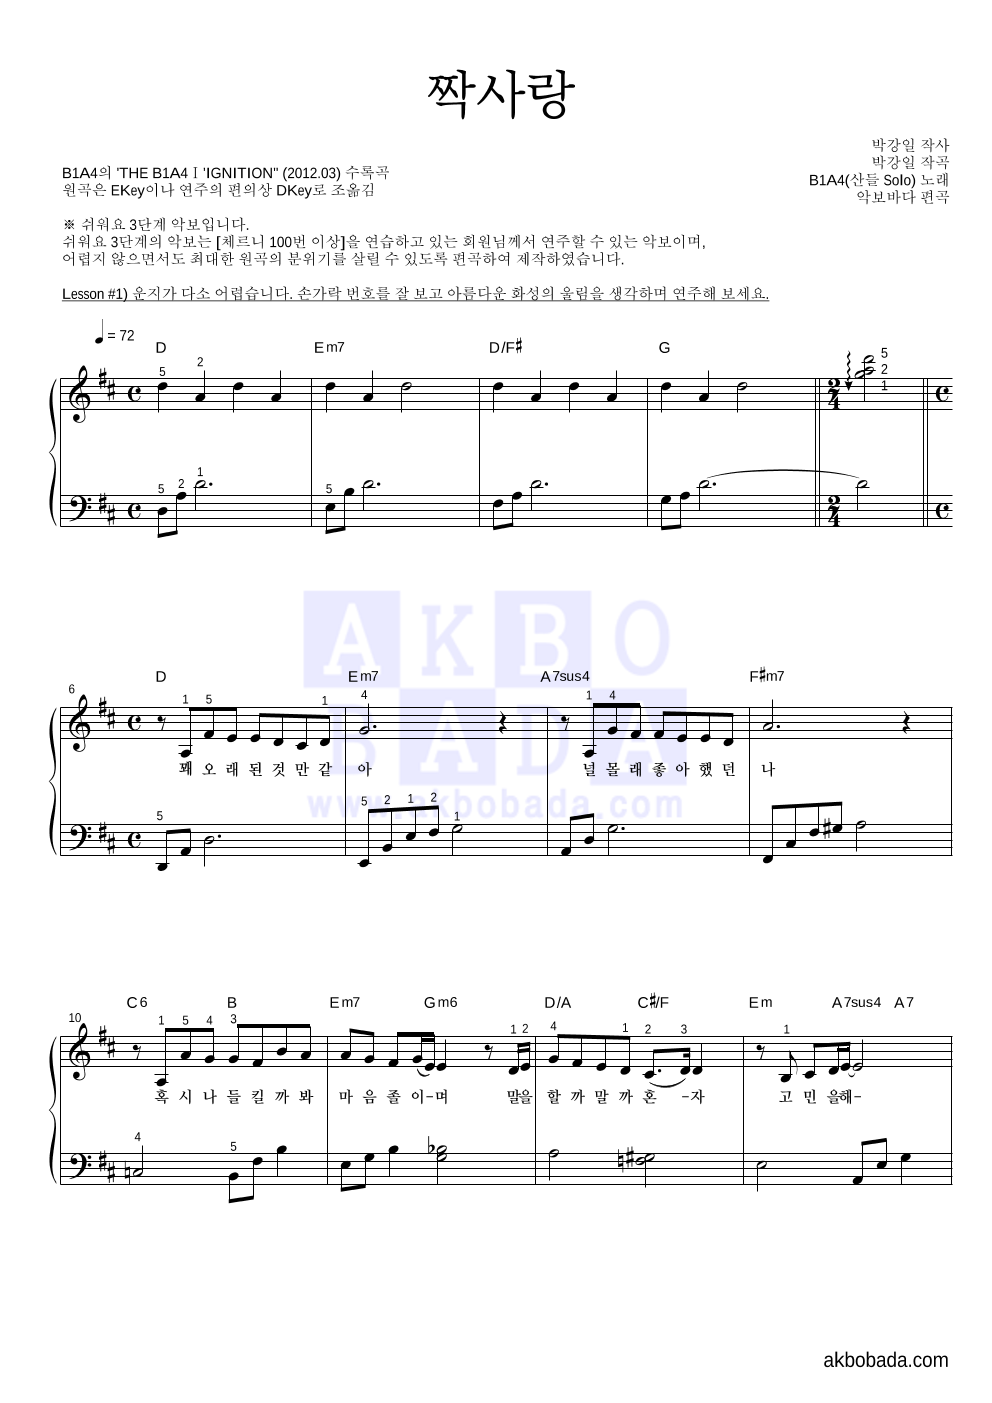 B1A4 - 짝사랑 (산들 Solo) 피아노2단-쉬워요 악보 